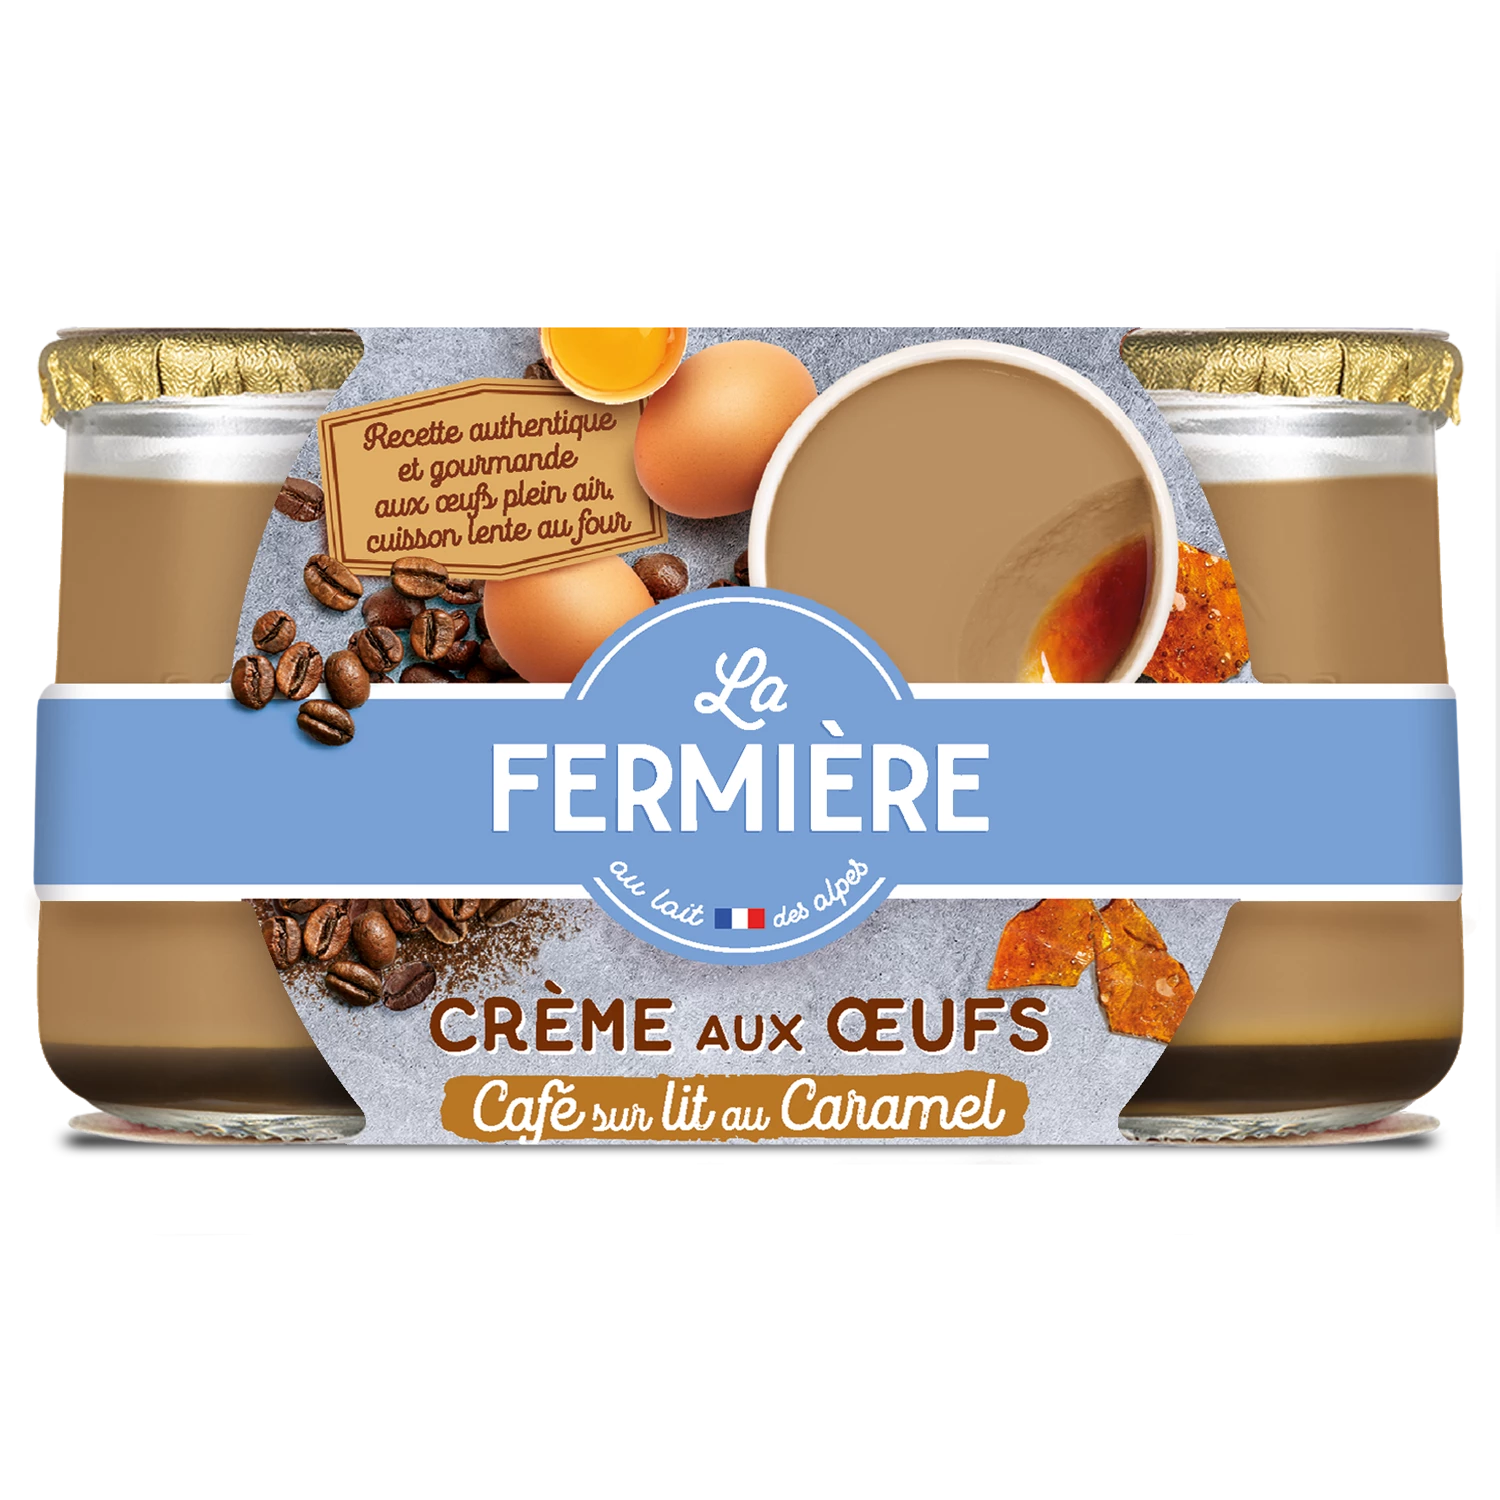 Creme Oeufs Cafe Fermiere